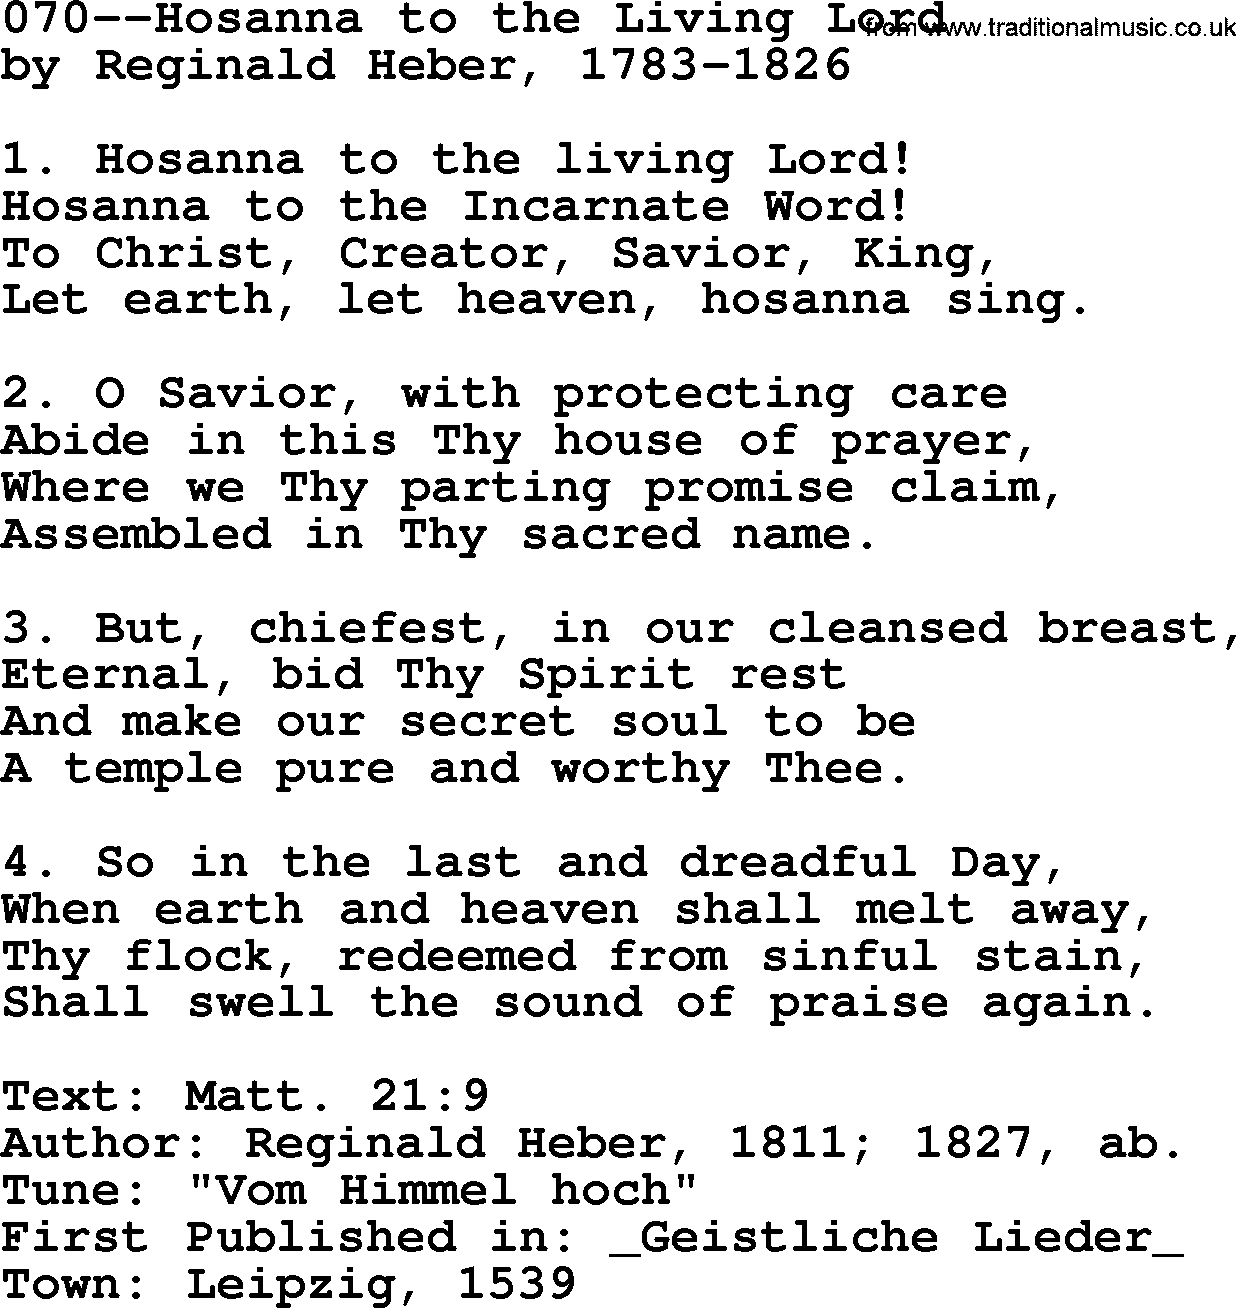 Lutheran Hymn: 070--Hosanna to the Living Lord.txt lyrics with PDF